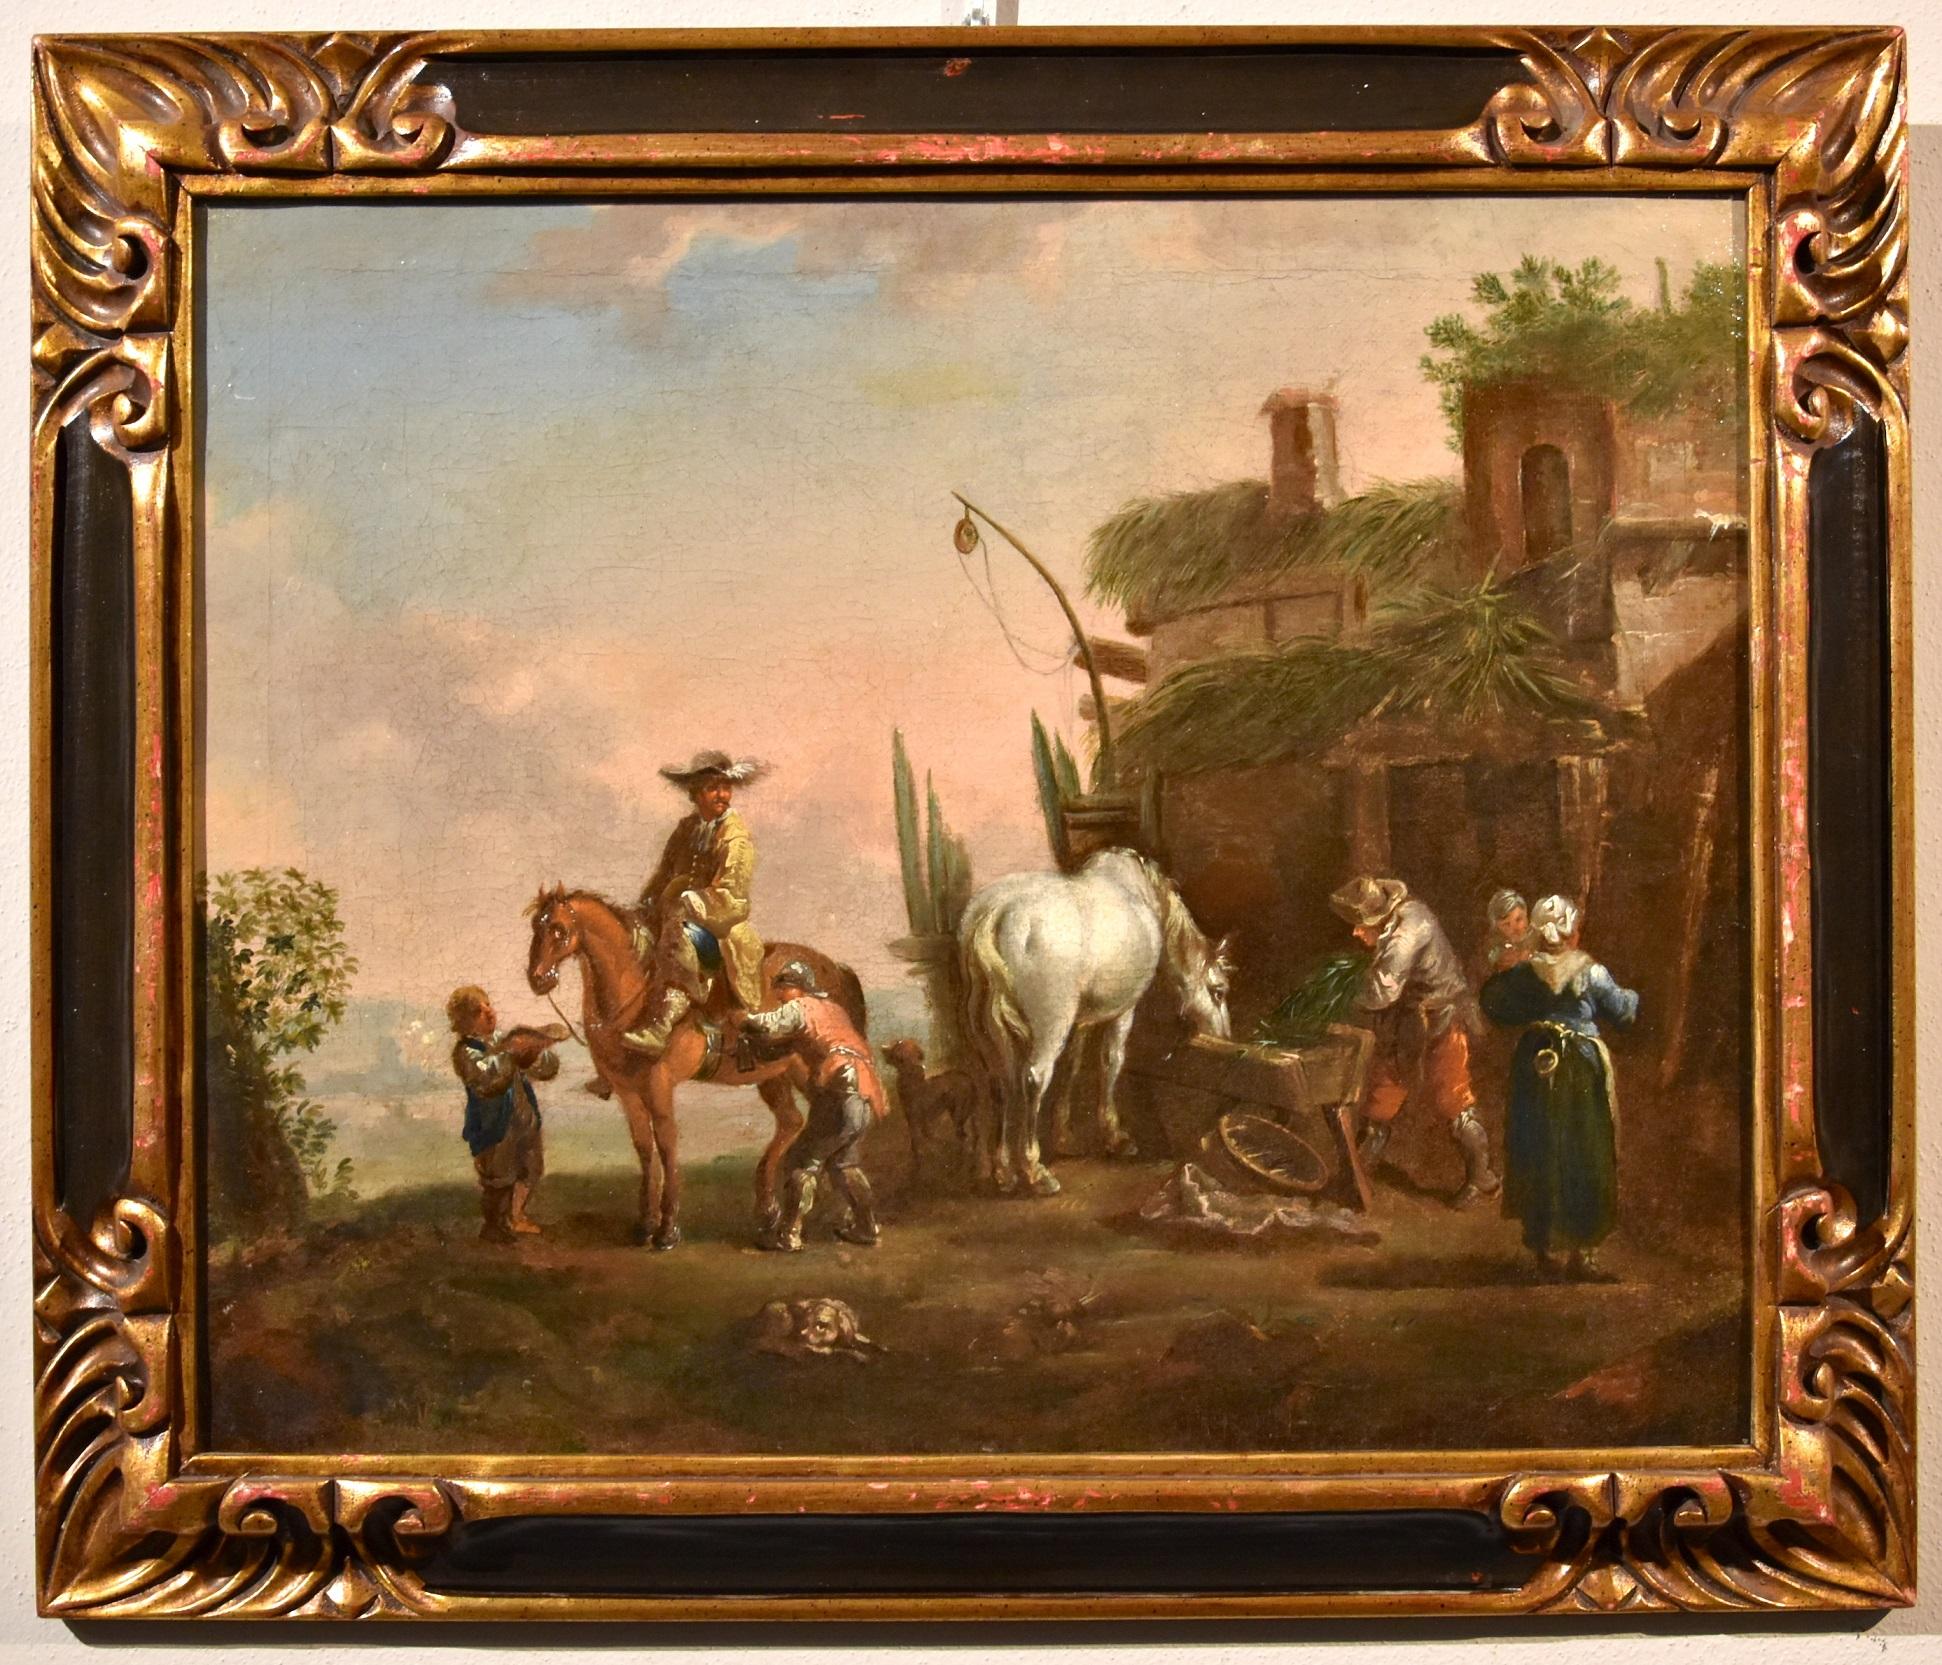 Ritter Van Douw Gemälde Öl auf Leinwand Alter Meister 17/18. Jahrhundert Flämische Kunst Italien (Alte Meister), Painting, von Simon Johannes van Douw (Antwerp c. 1630 - c. 1677)